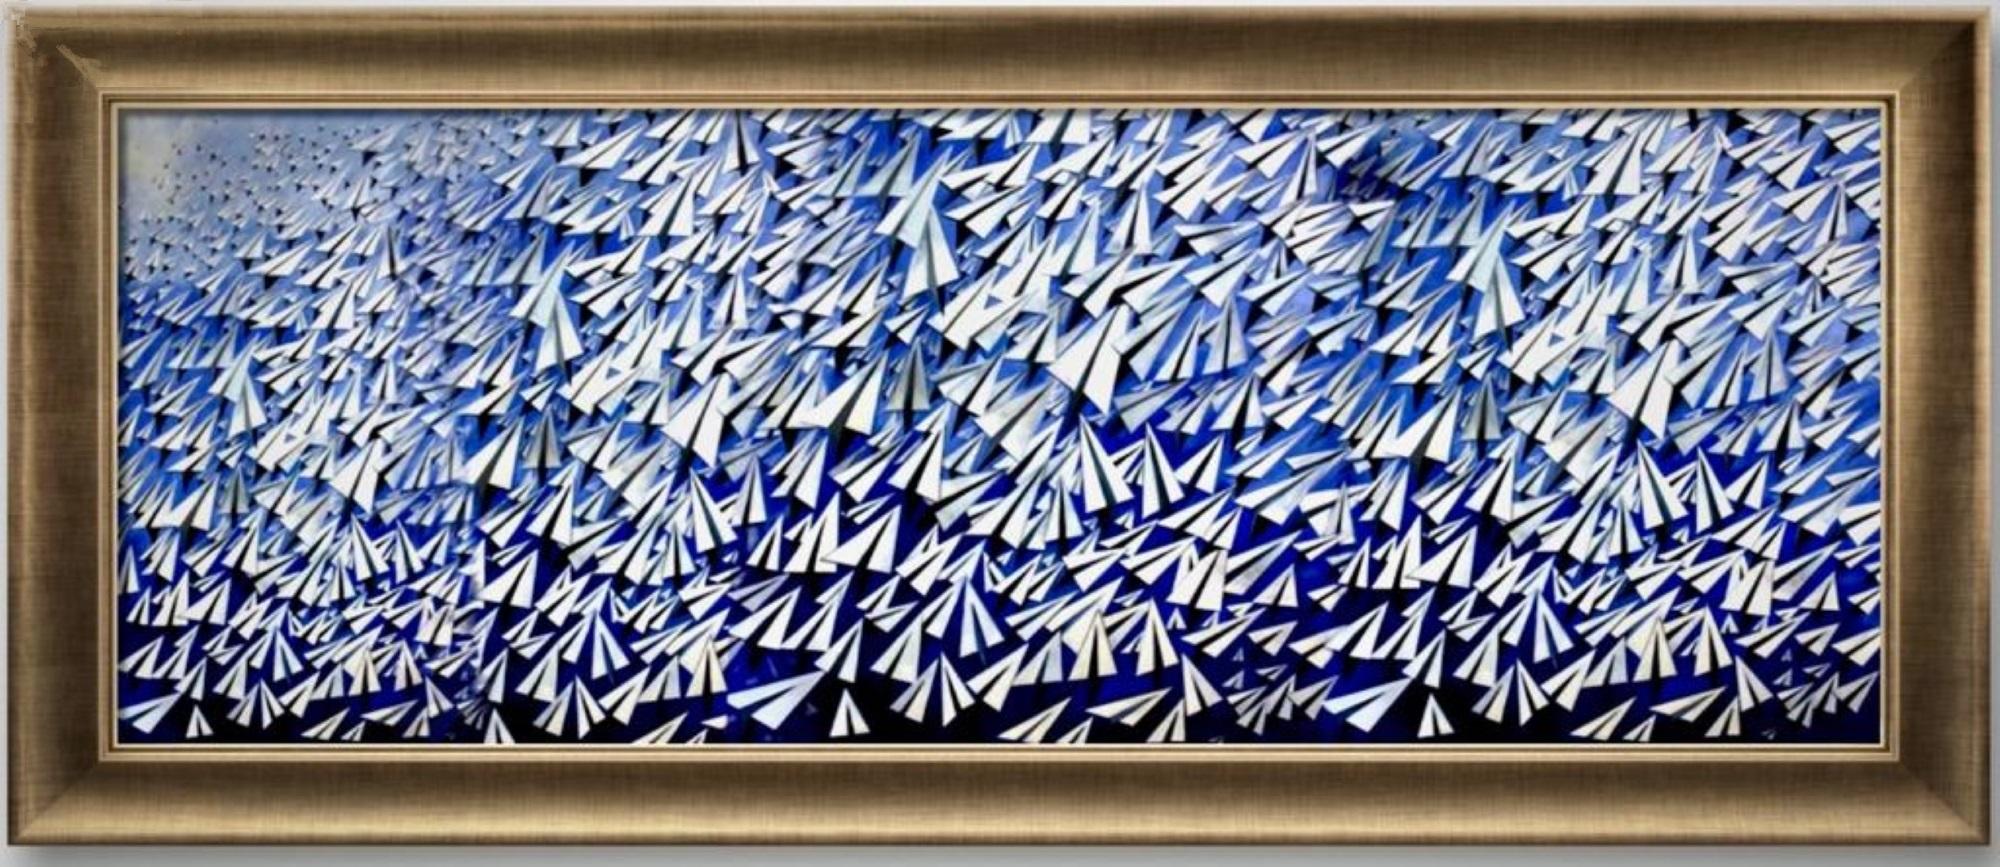 HANI NAJI Abstract Print -  Wall  Mural - Clouds  96x192